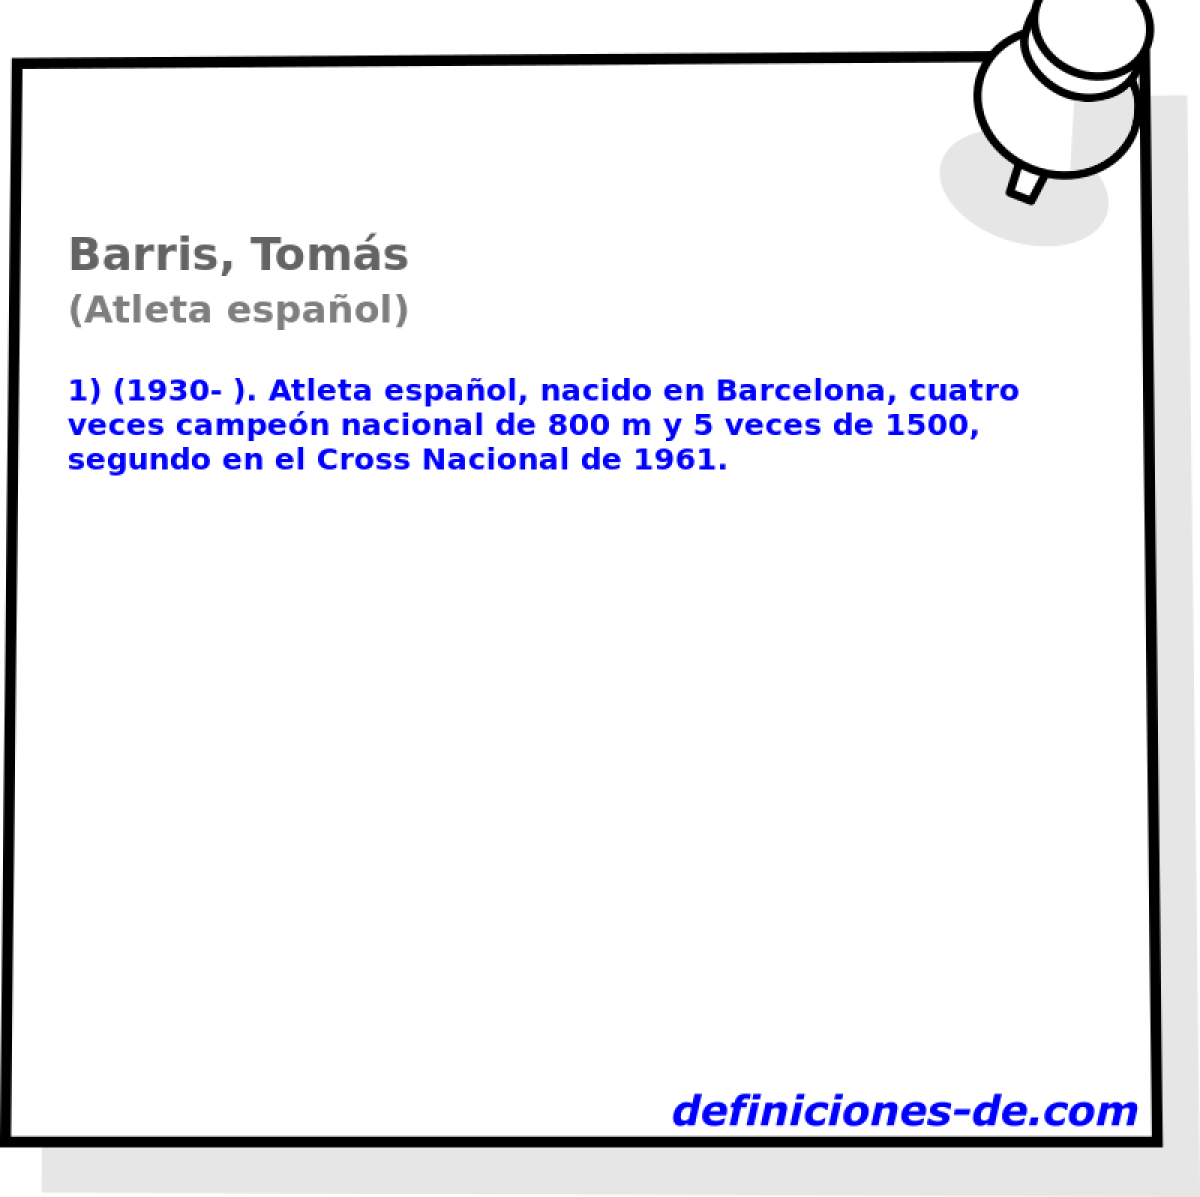 Barris, Toms (Atleta espaol)